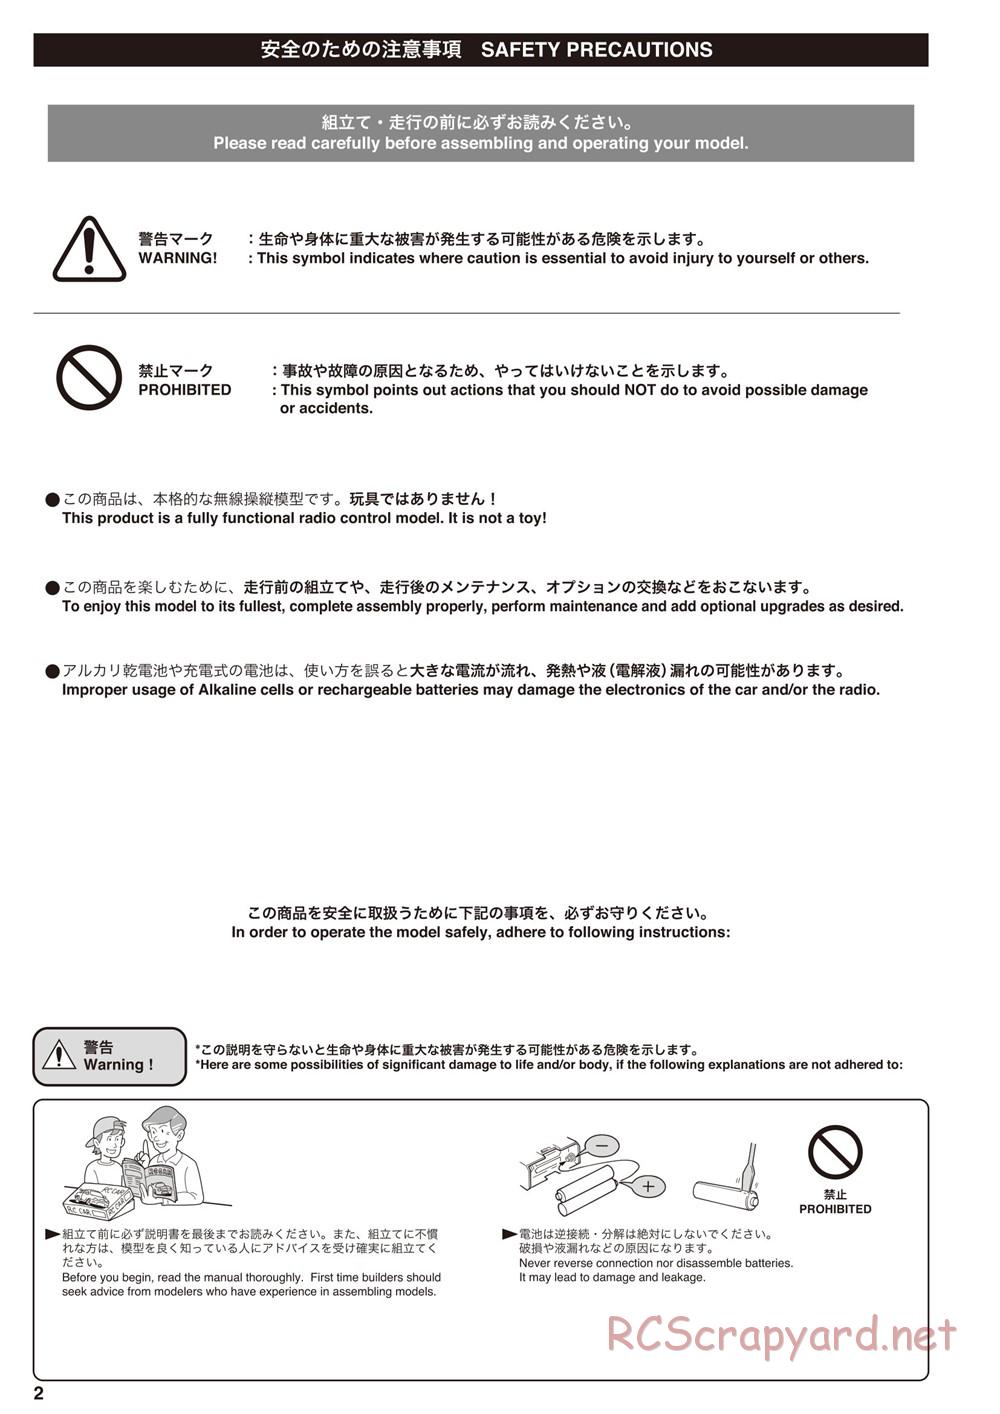 Kyosho - Inferno MP9e TKI - Manual - Page 2